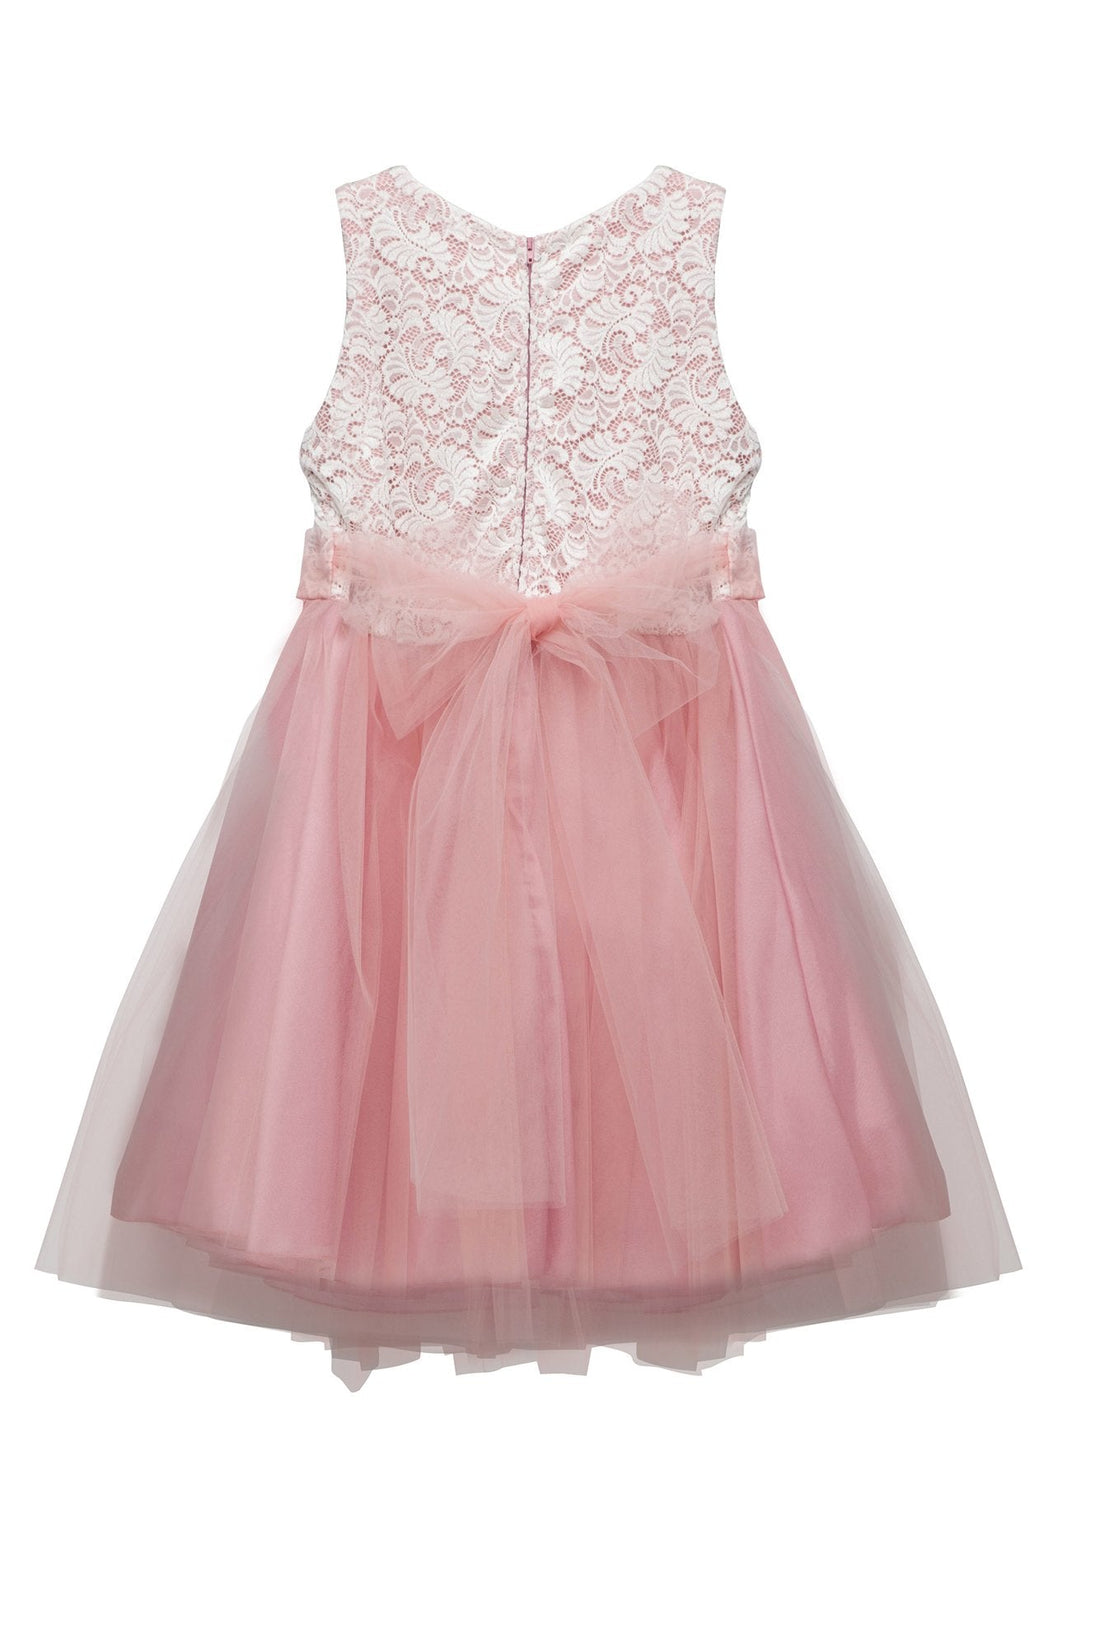 Summer Lace Princess Dresses 1-5 Year Birthday Dress Flowers Girls Dress  Party# | eBay